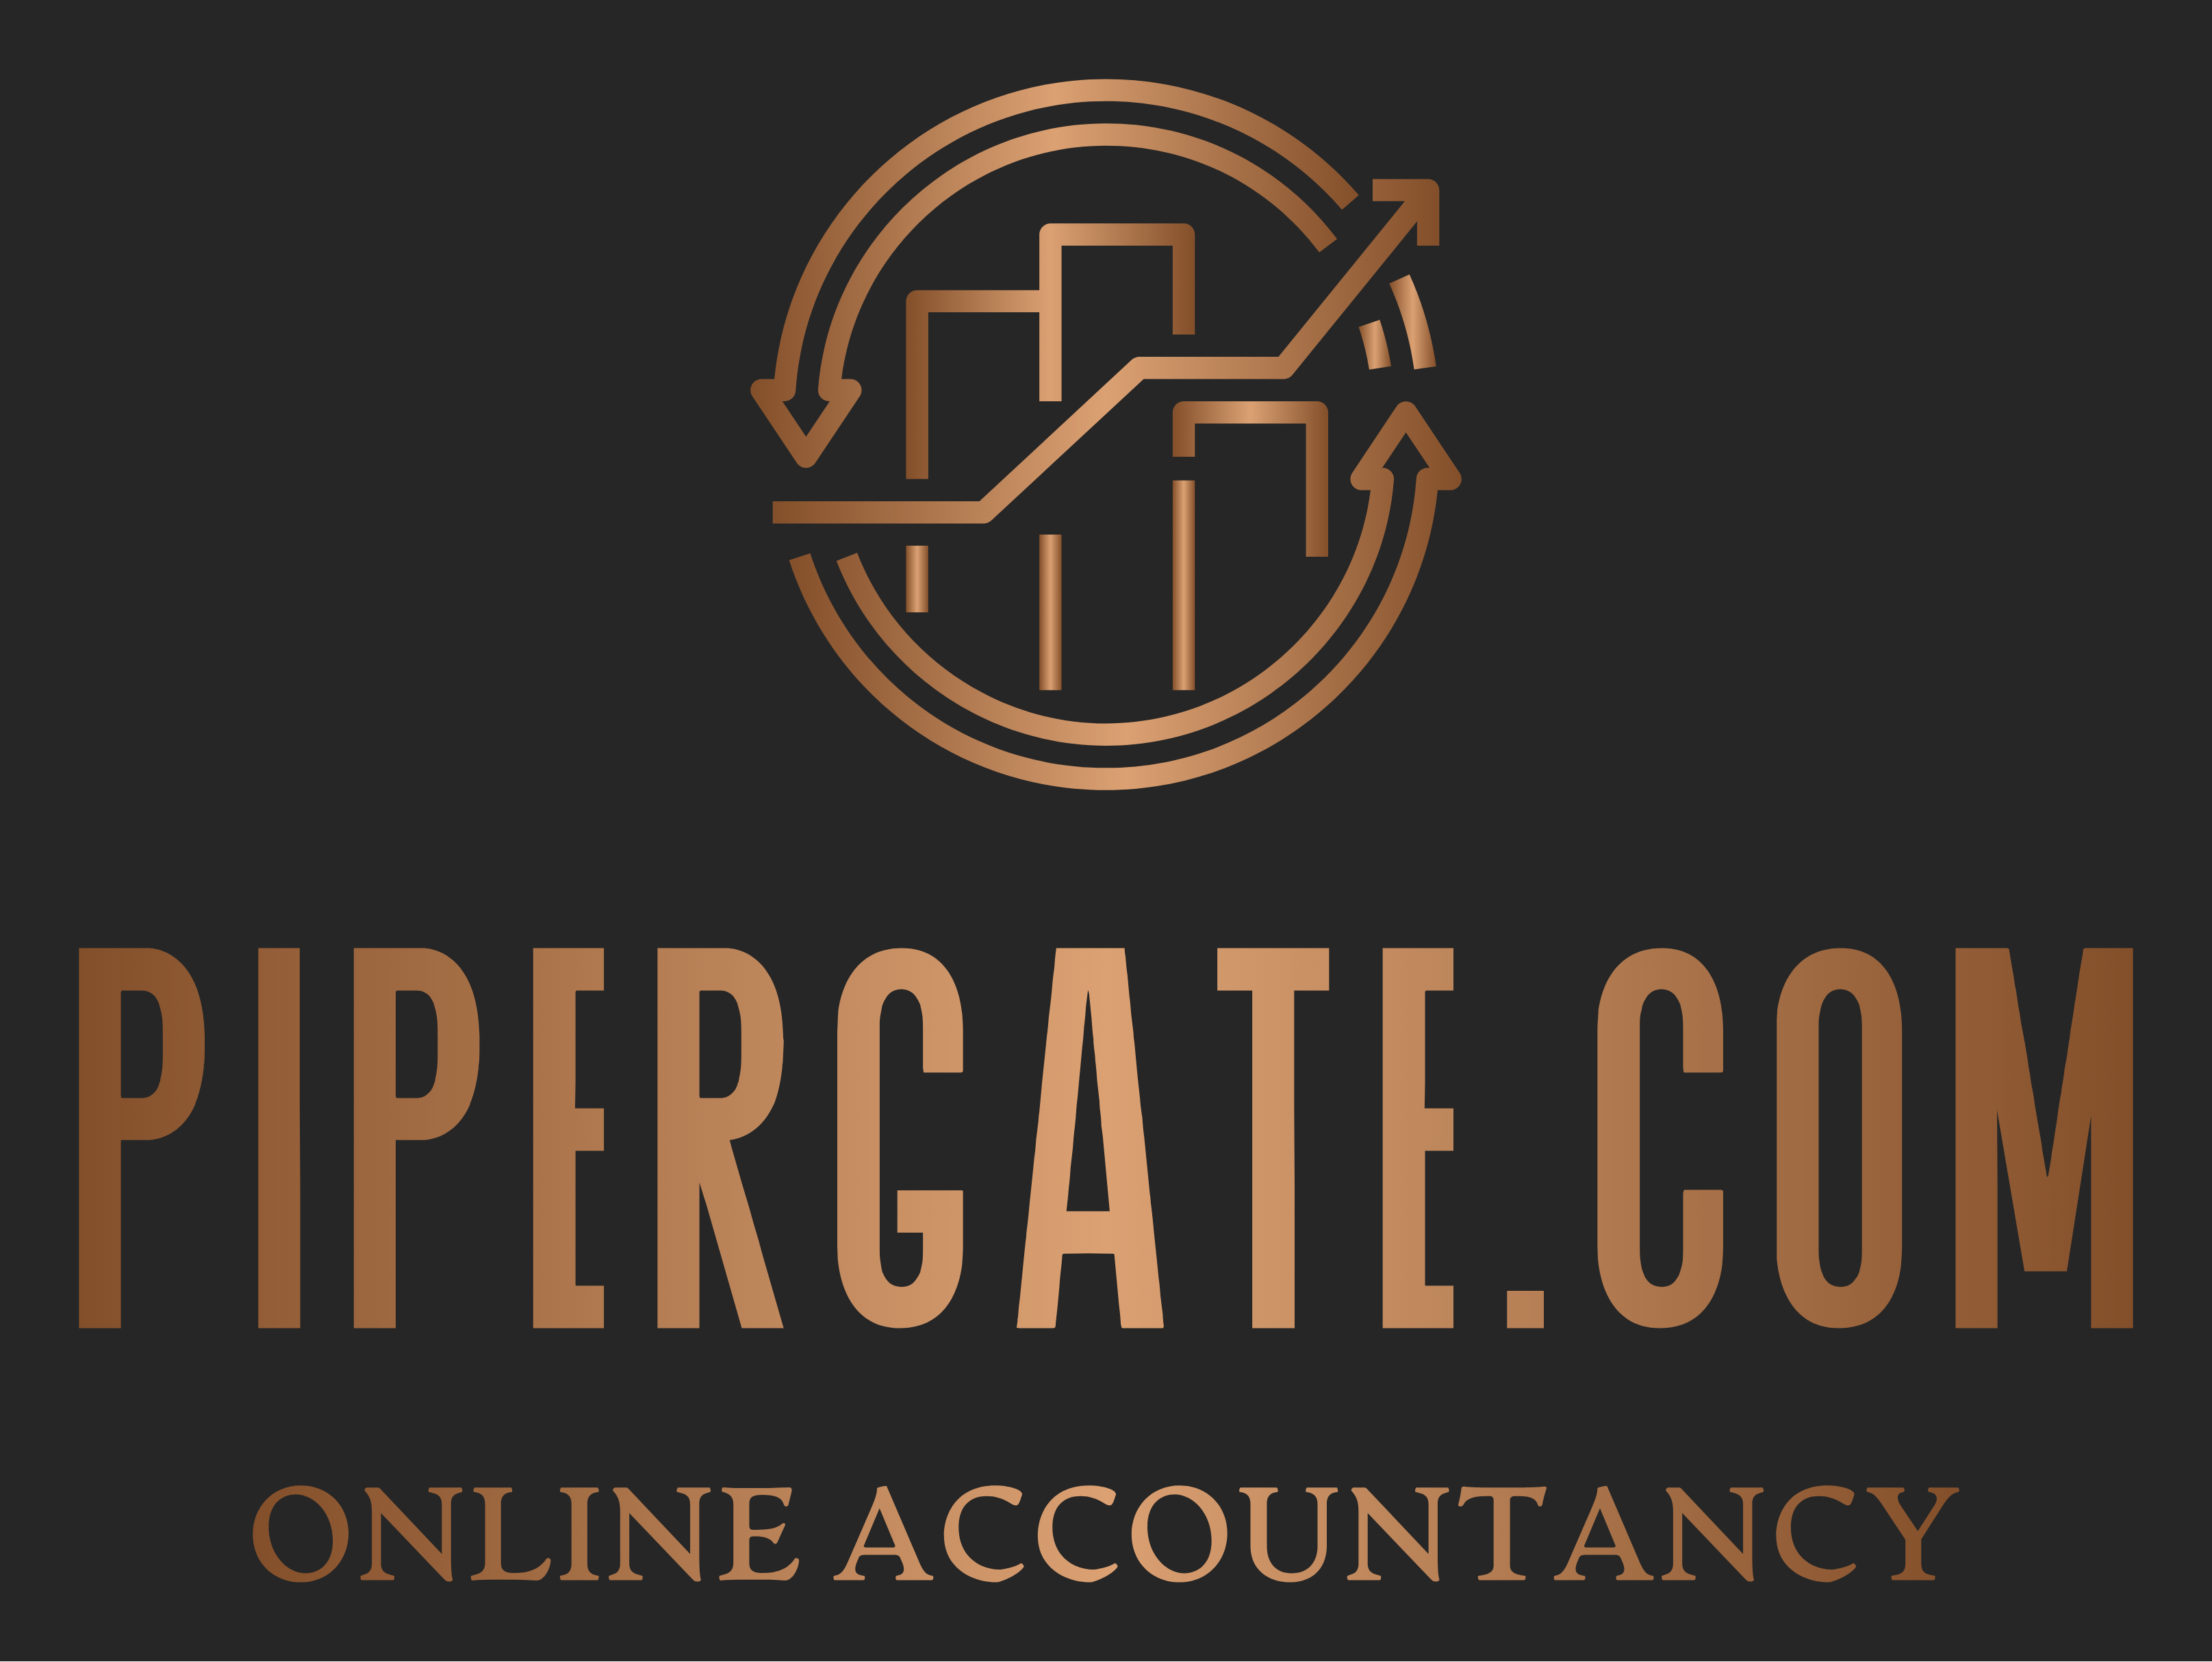 Pipergate.com